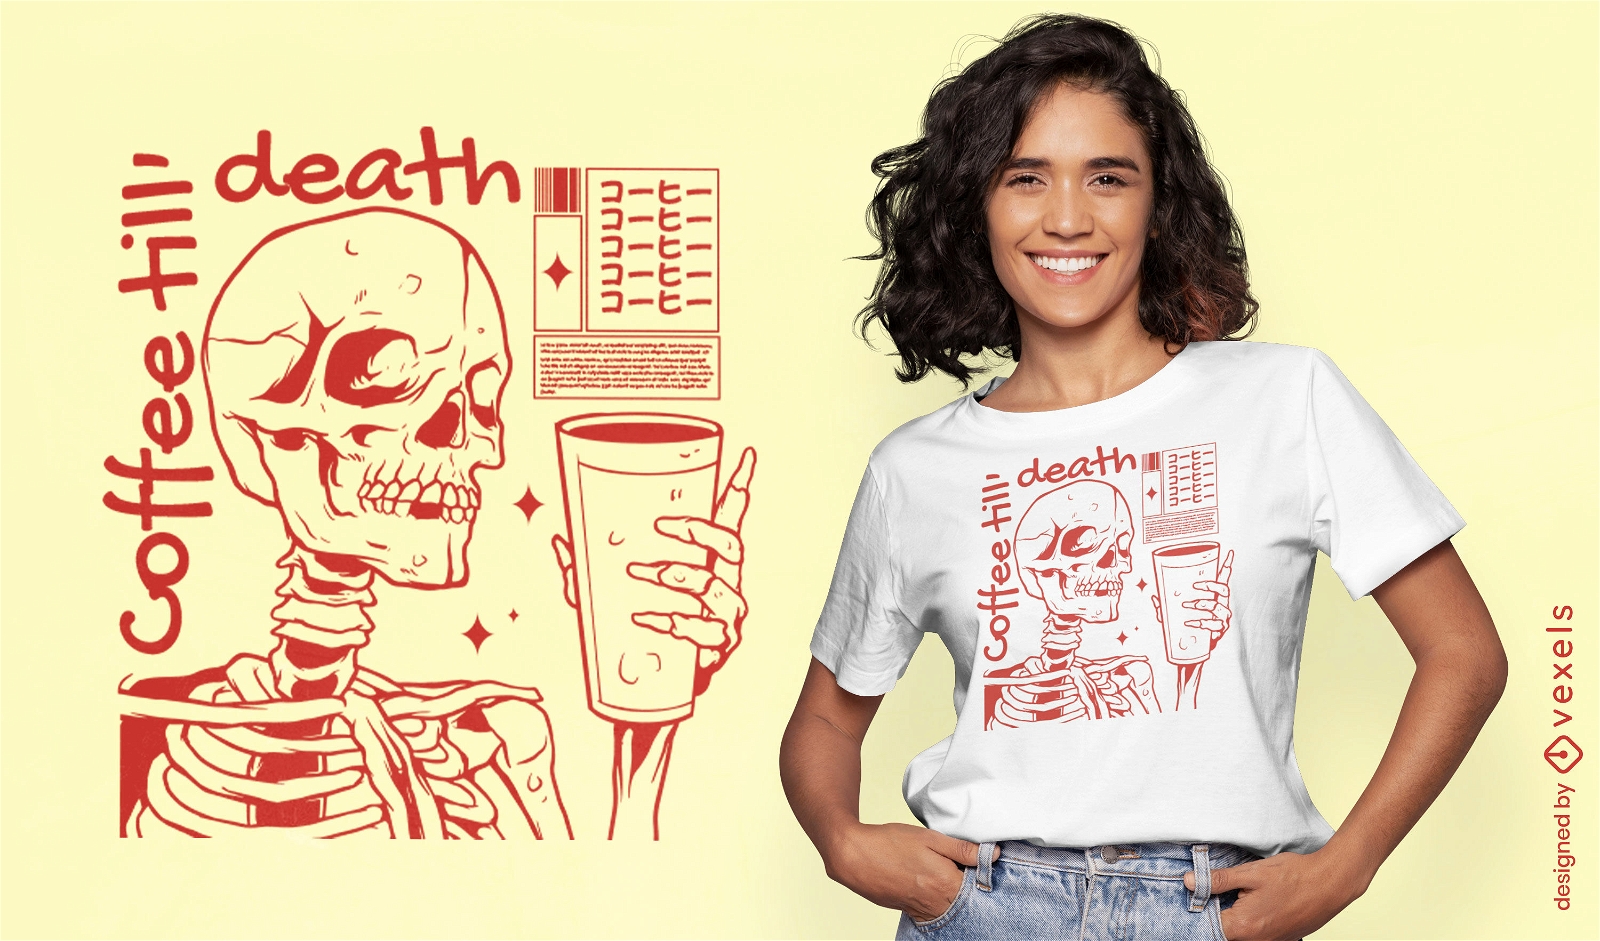 Skelett- und Kaffeegetr?nk-T-Shirt-Design